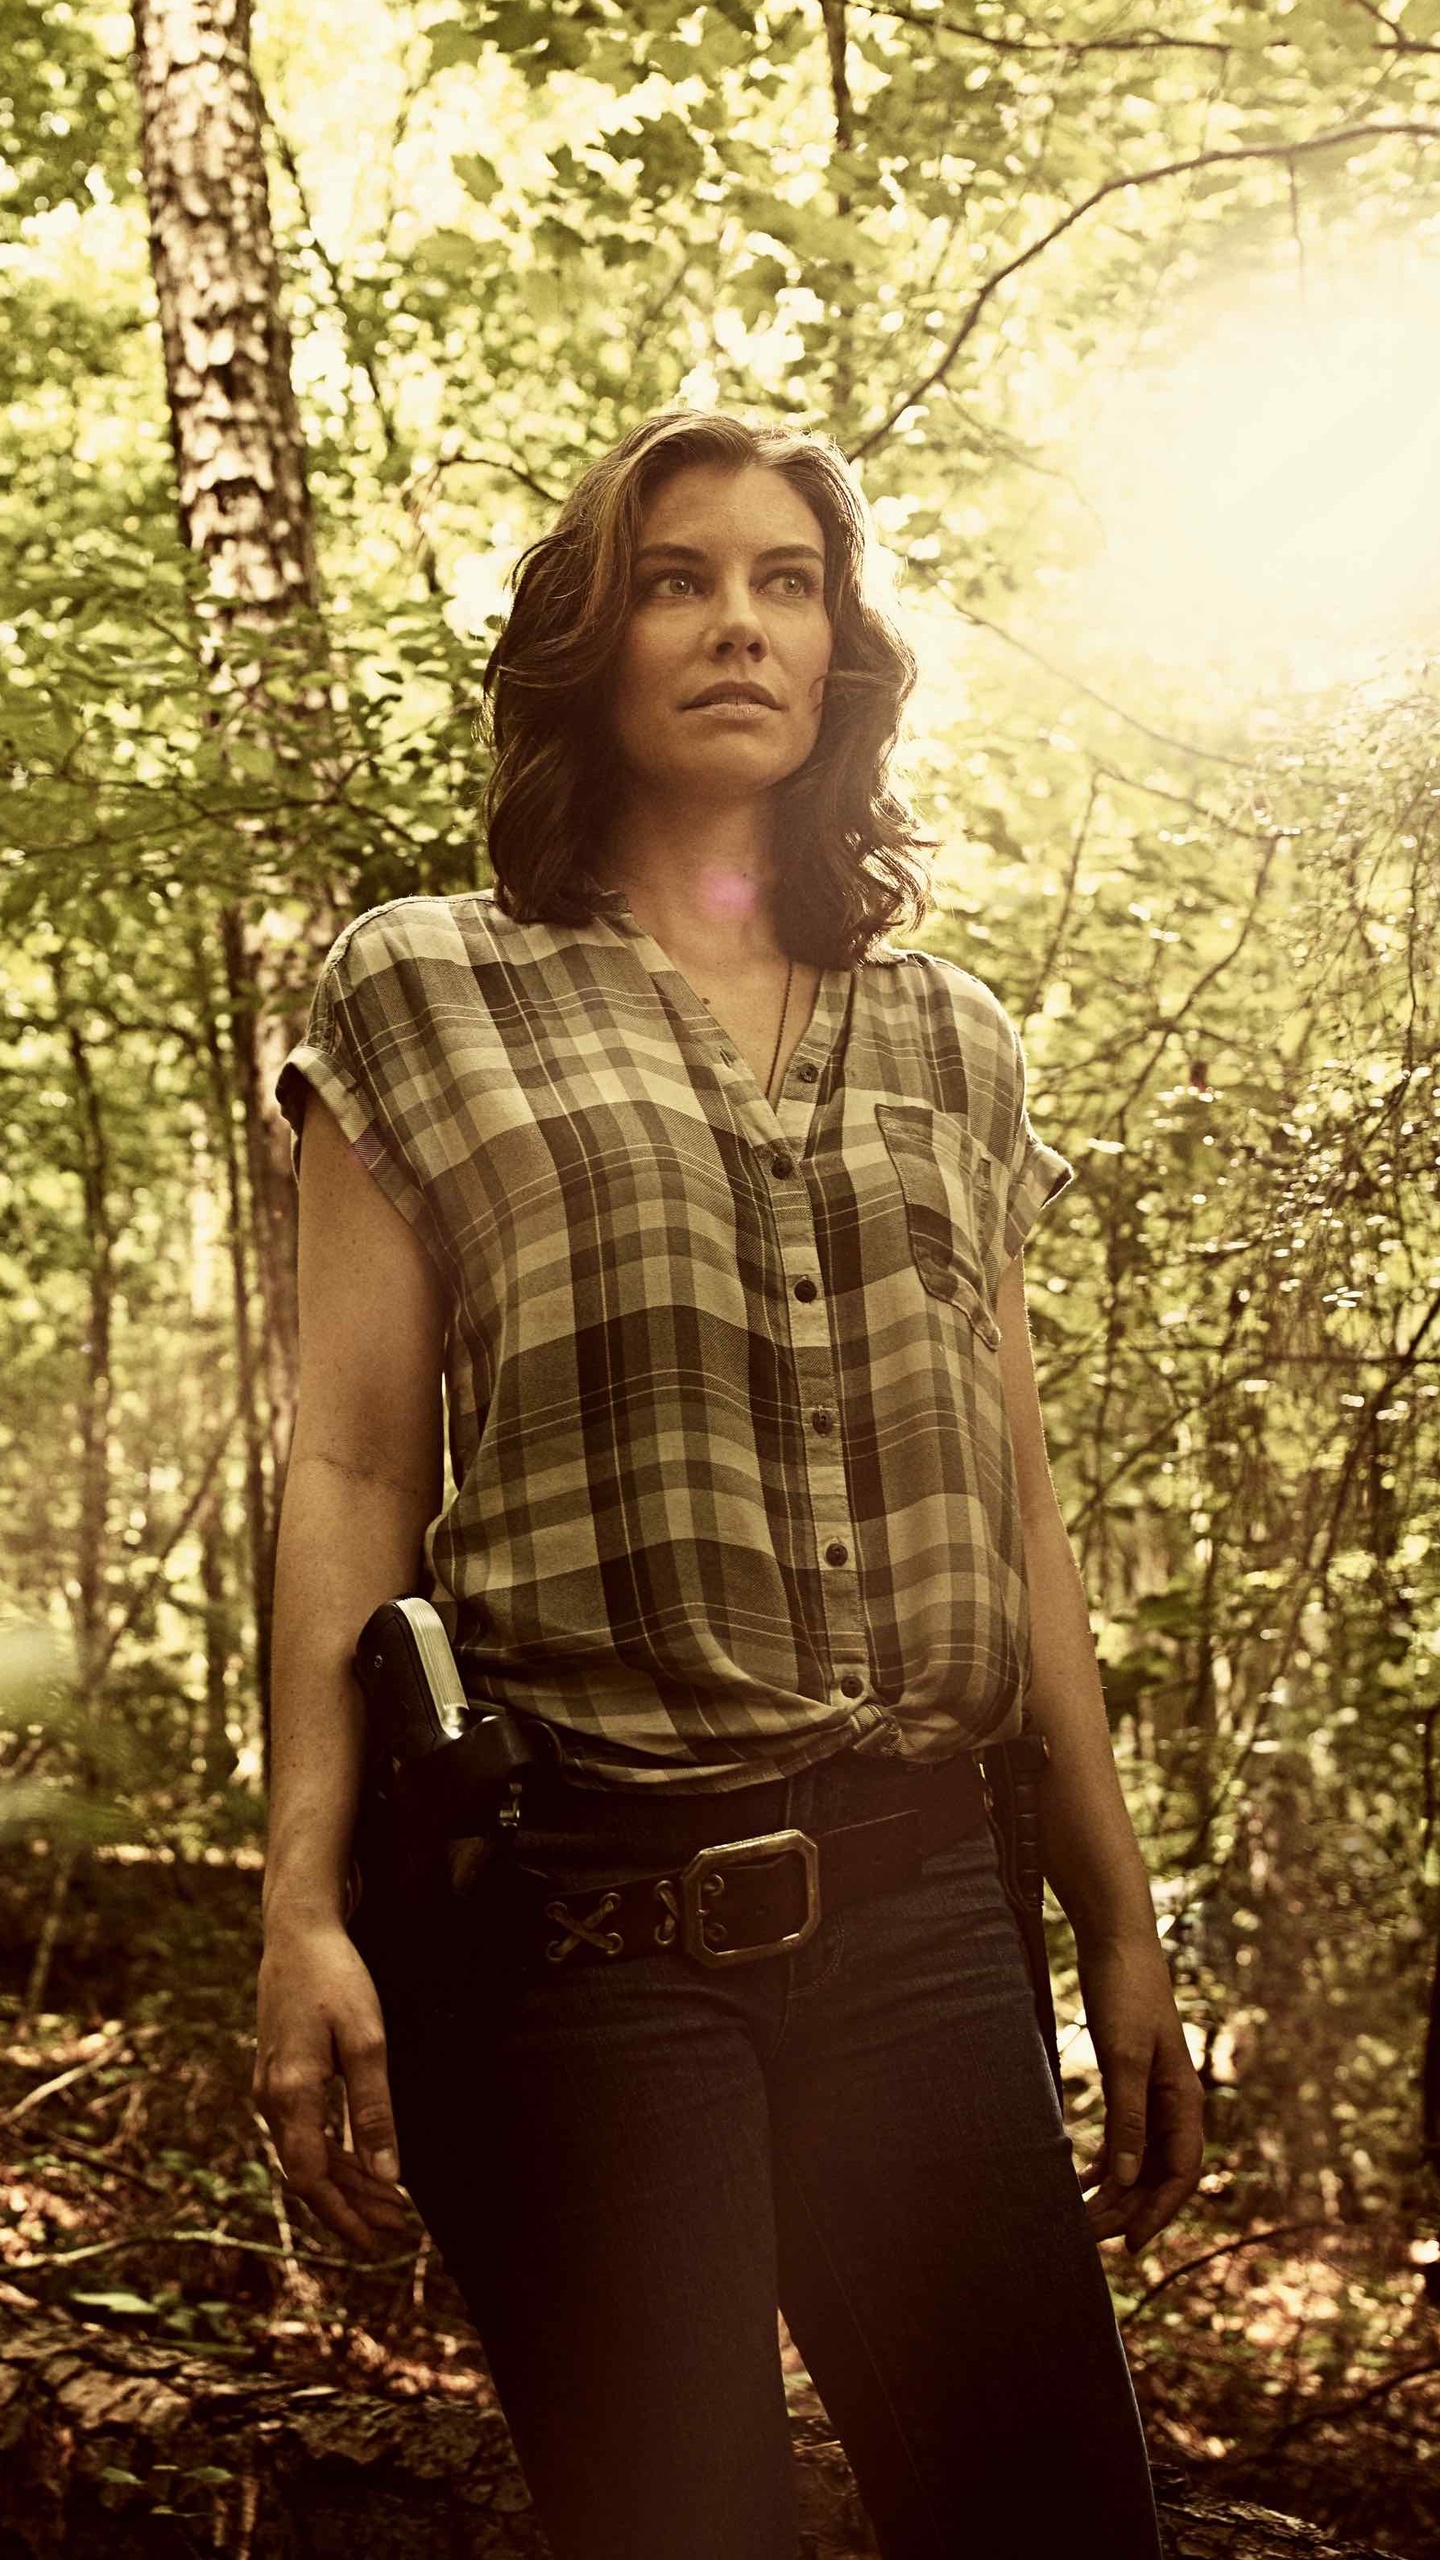 Lauren Cohan As Maggie Rhee The Walking Dead Season 9 2018 Samsung Galaxy S S7 , Google Pixel XL , Nexus 6P , LG G5 HD 4k Wallpaper, Image, Background, Photo and Picture